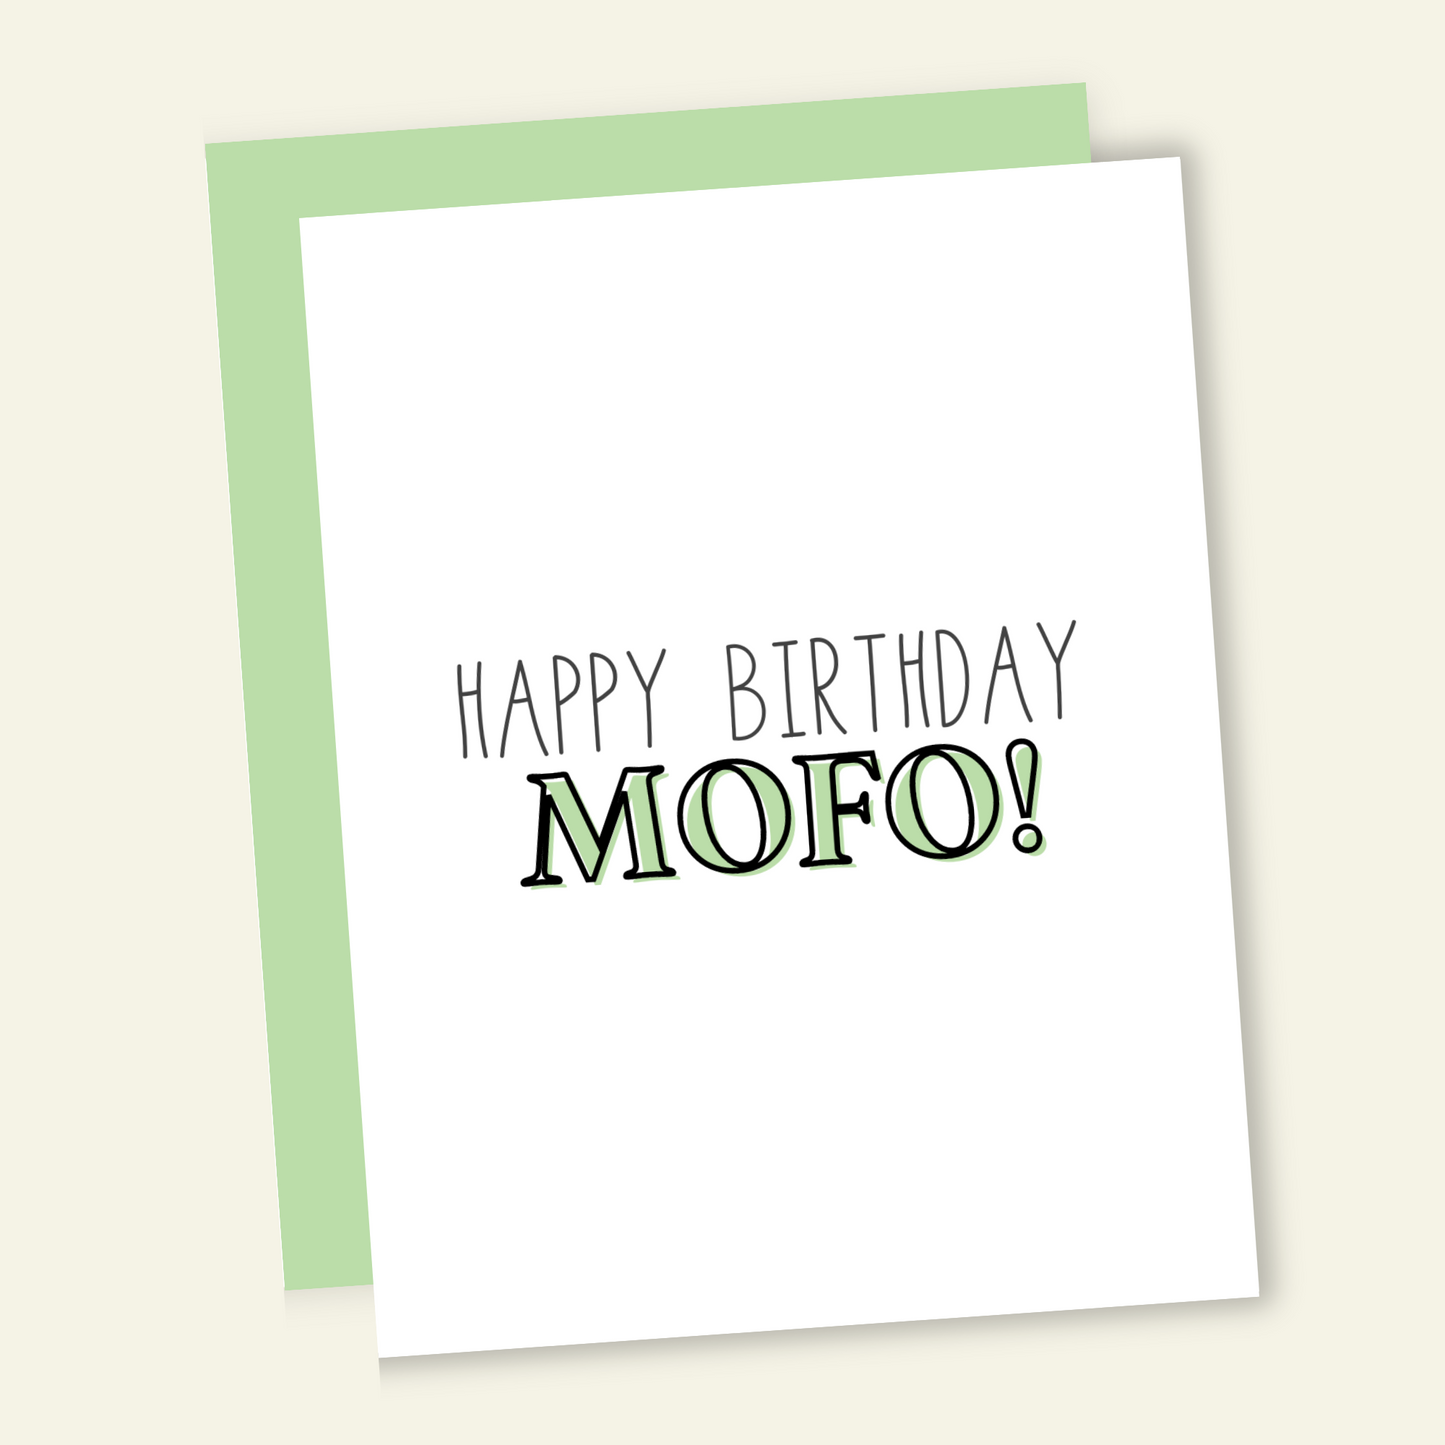 Happy Birthday MOFO. Birthday Card